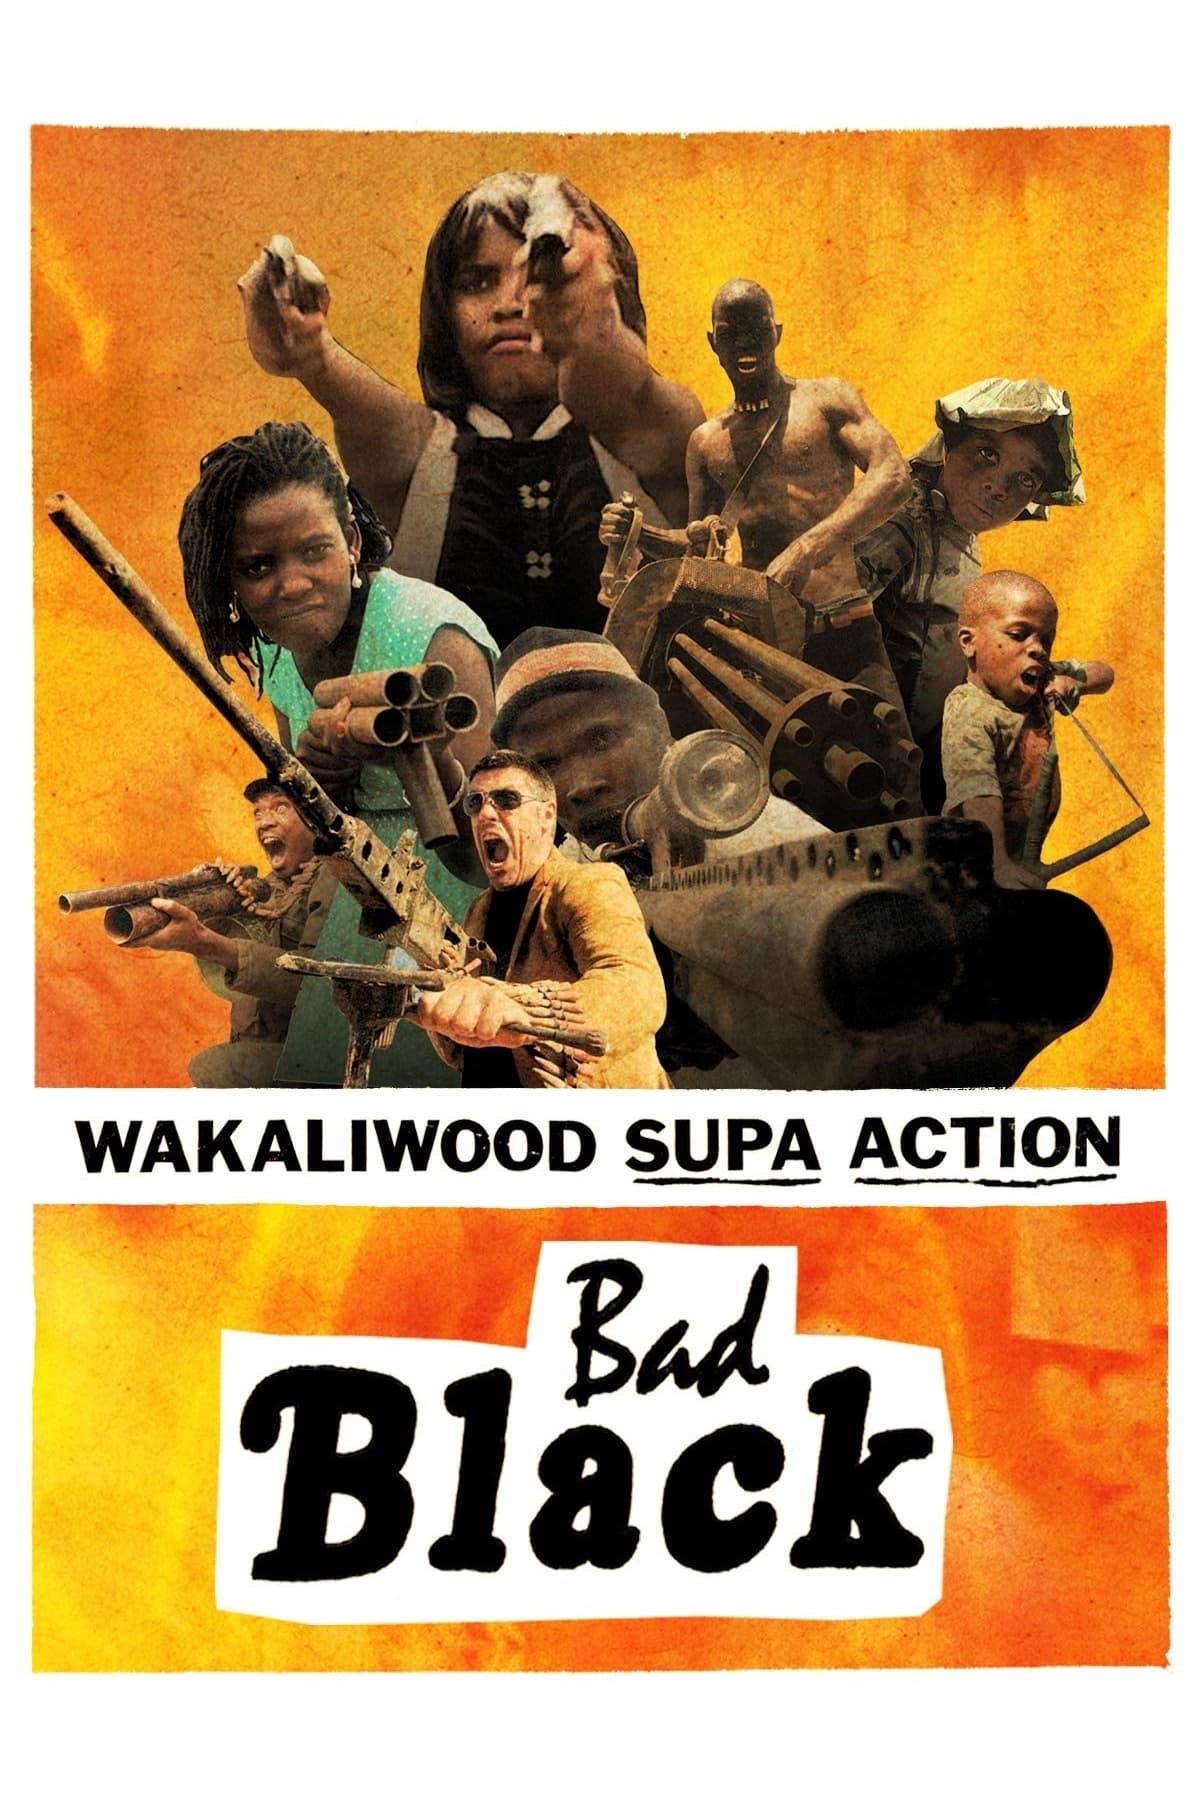 Bad Black poster